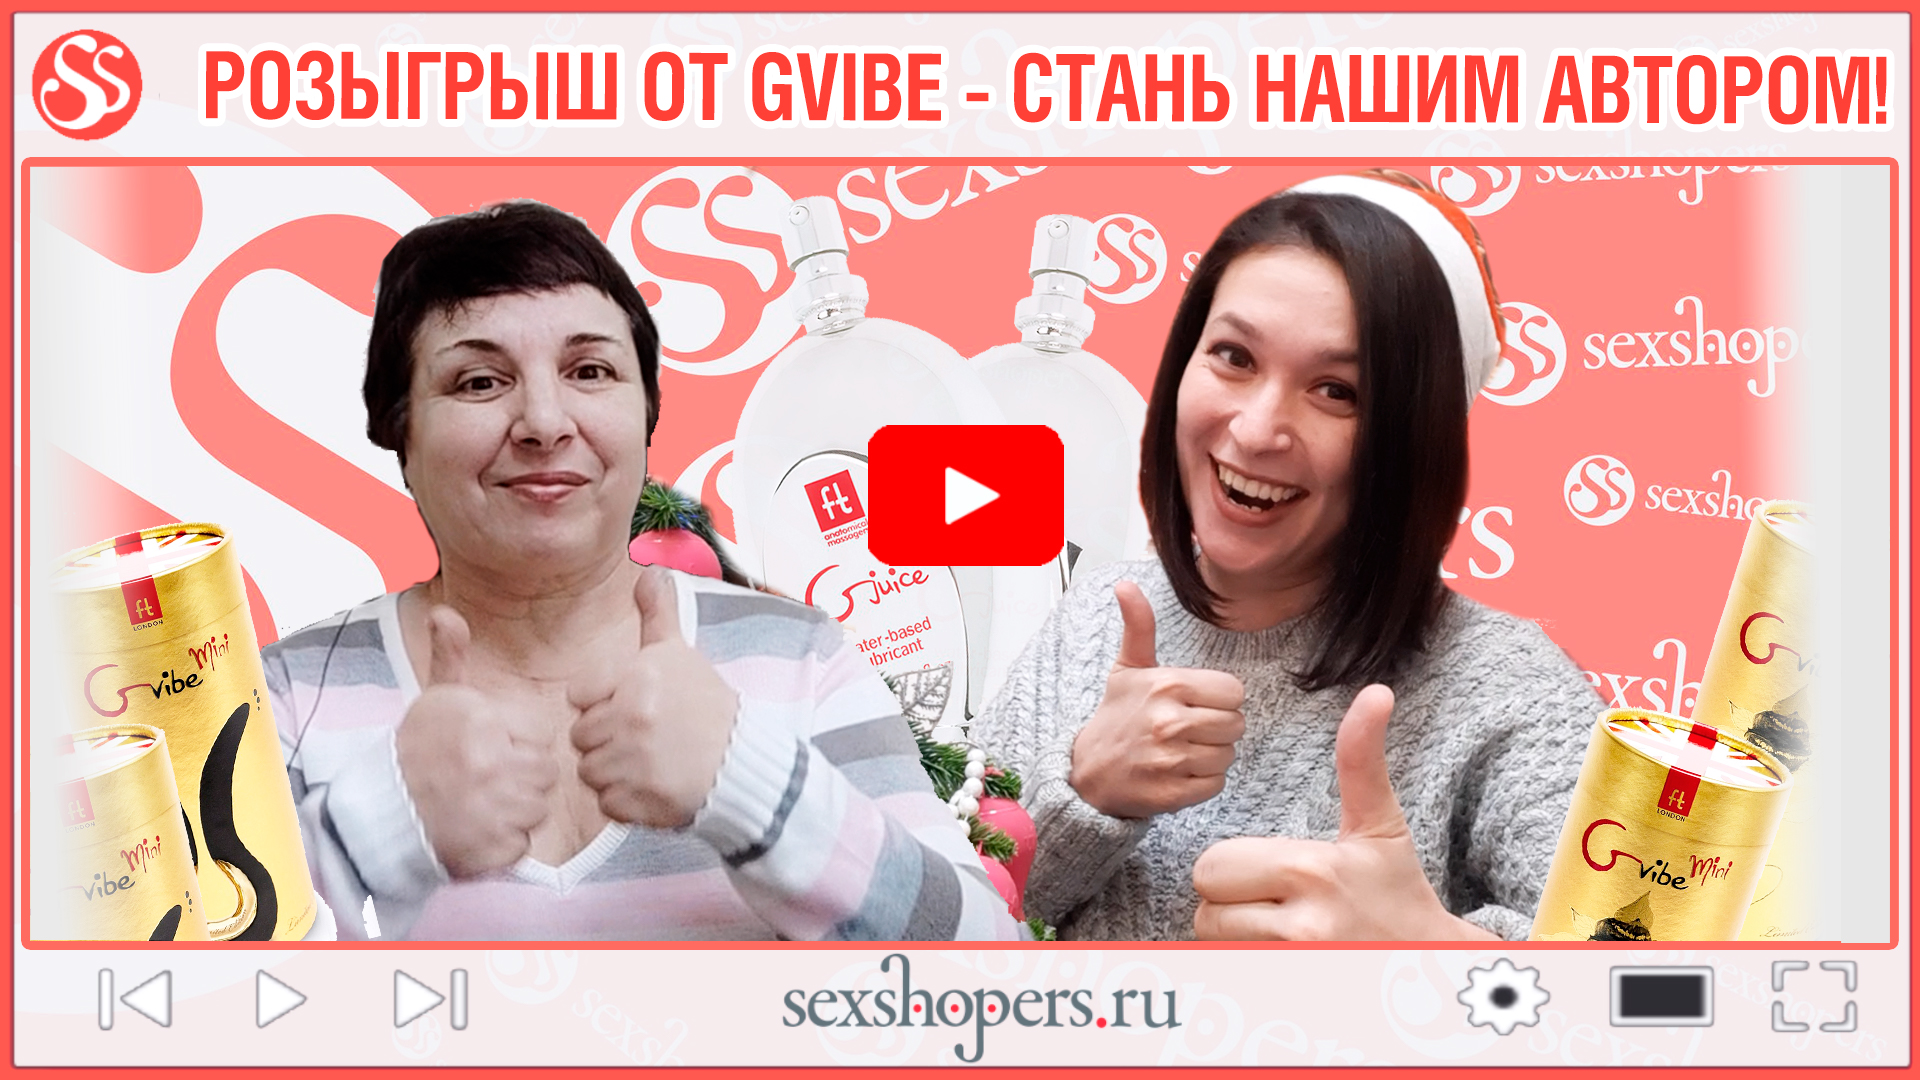 Новогодний конкурс Gvibe и sexshopers.ru